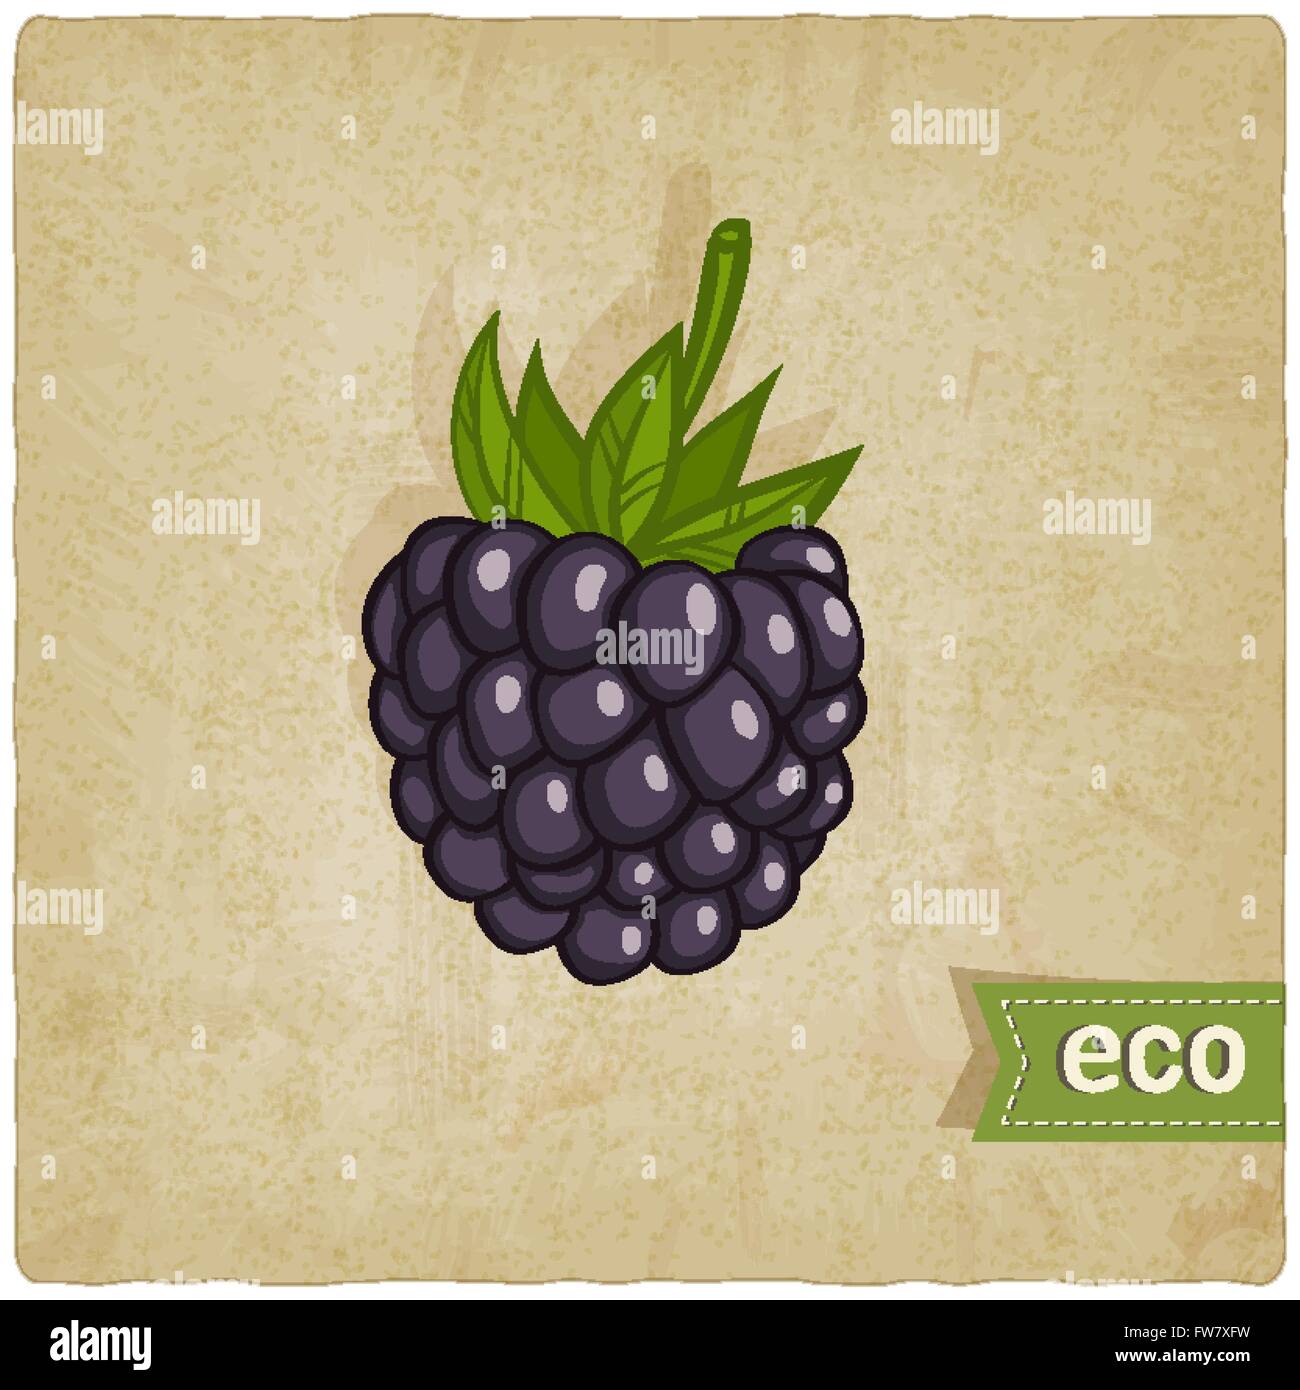 BlackBerry Eco Hintergrund - Vektor-Illustration. EPS 10 Stock Vektor